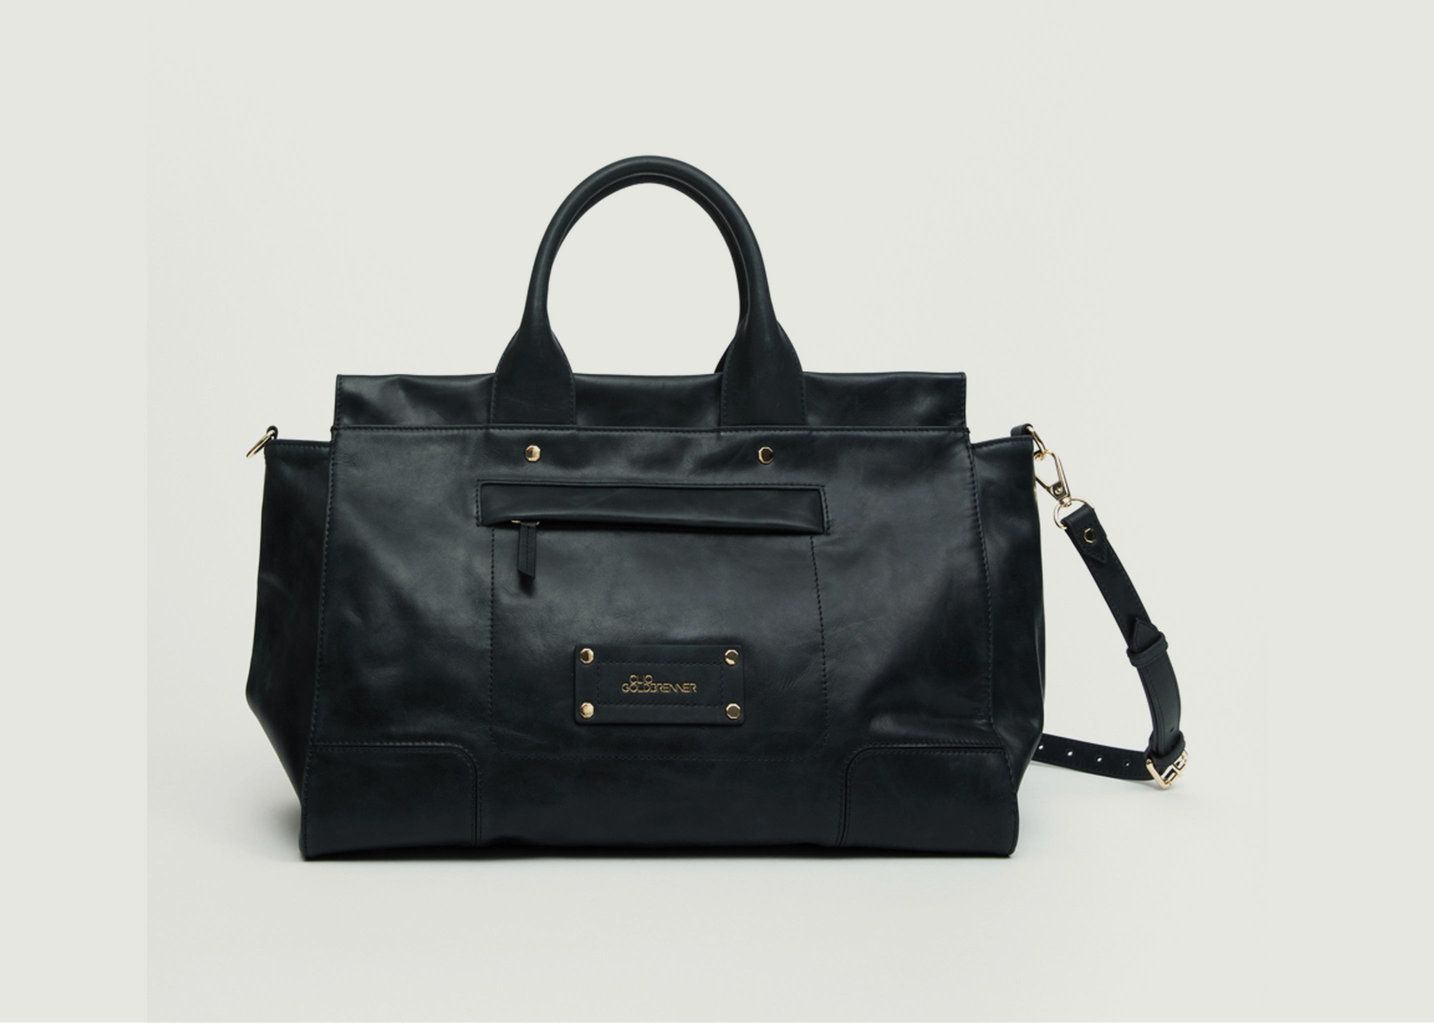 Hercule Classic Calfskin Leather Bag - Clio Goldbrenner